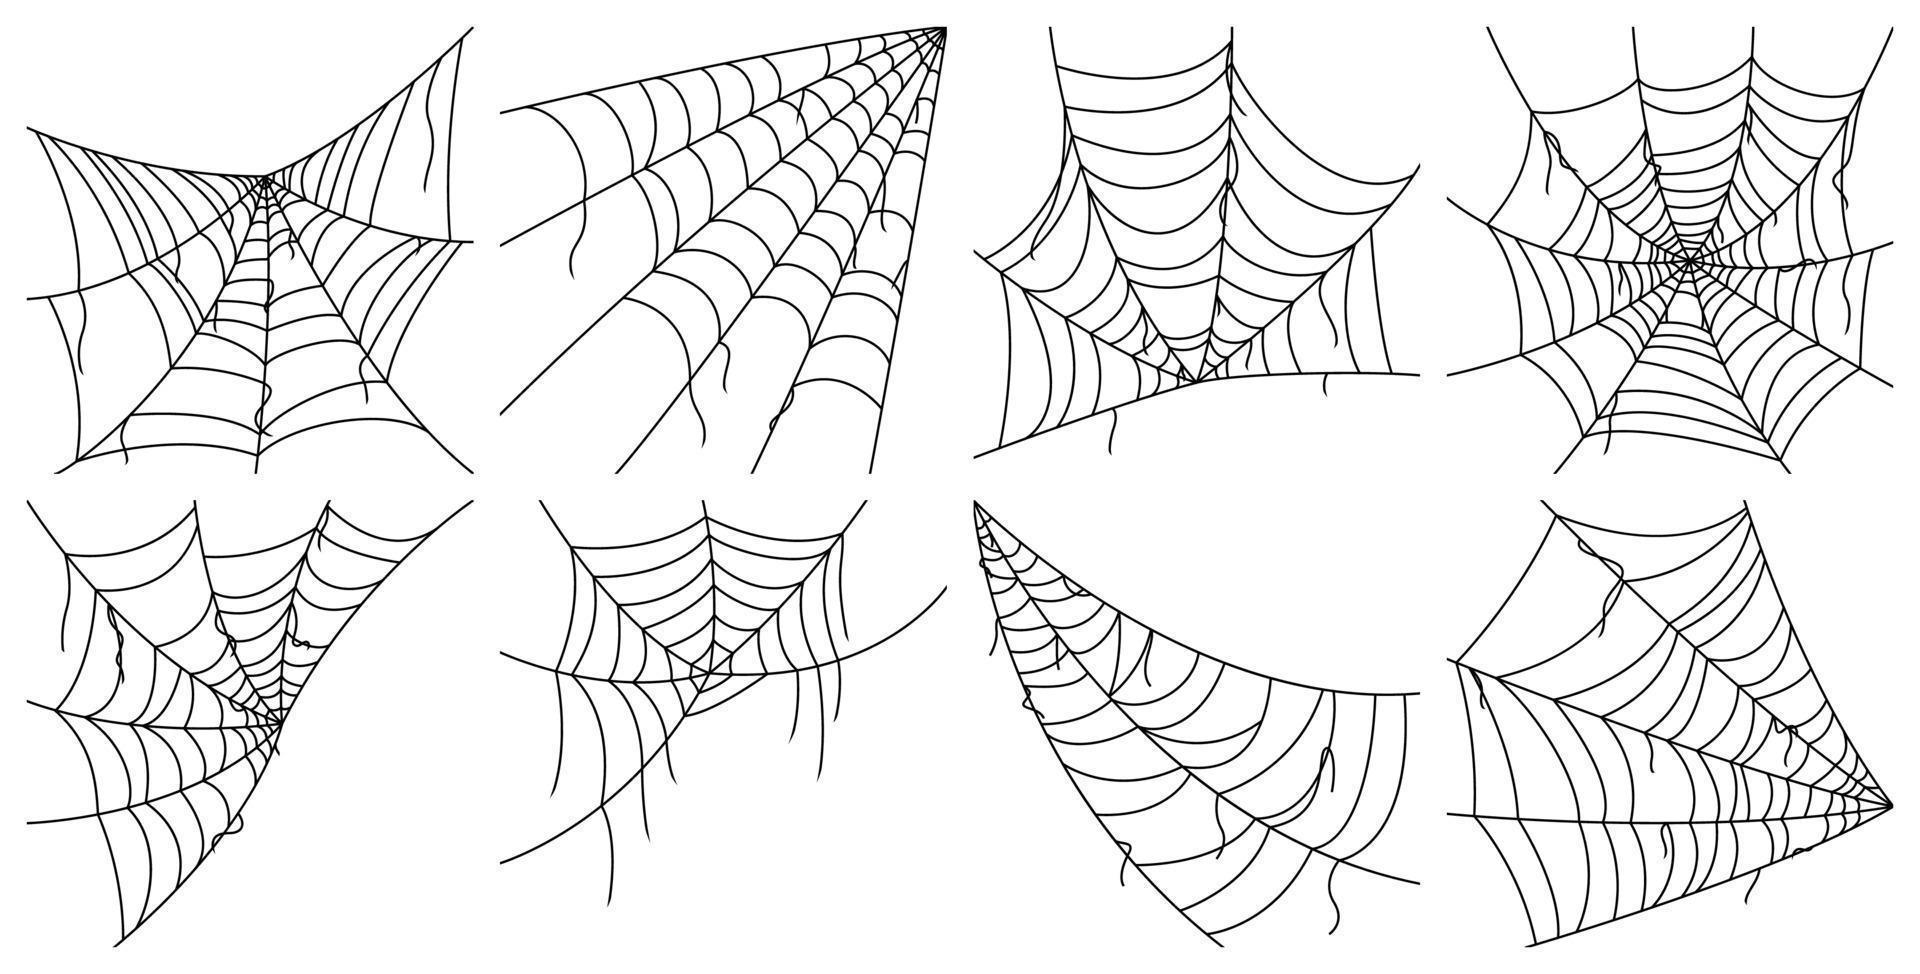 conjunto de teia de aranha isolado no fundo branco vetor